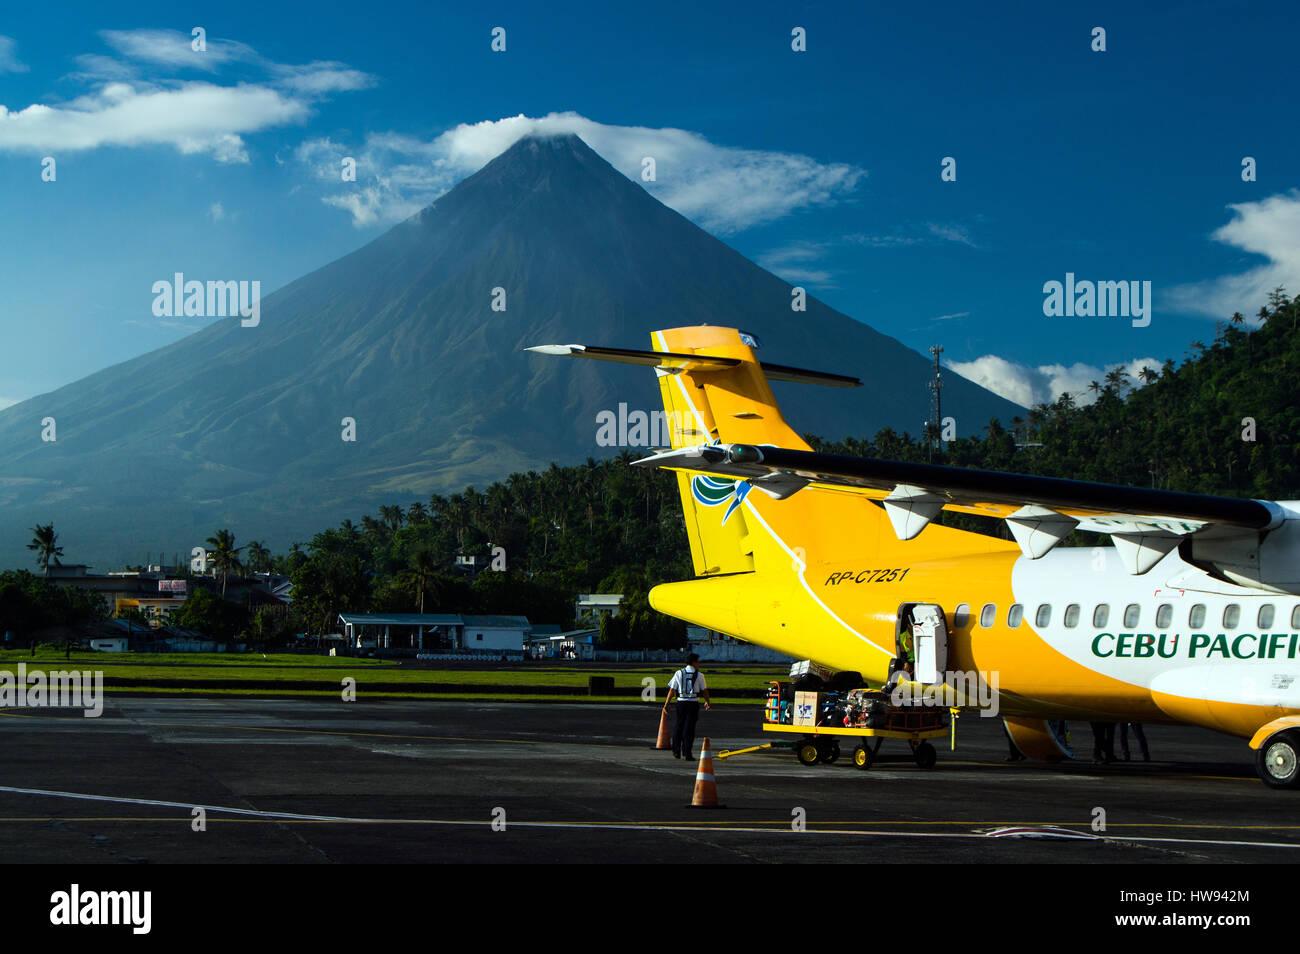 Cebu Pacific plane and Mount Mayon, Legazpi Airport, Legazpi City, Philippines Stock Photo